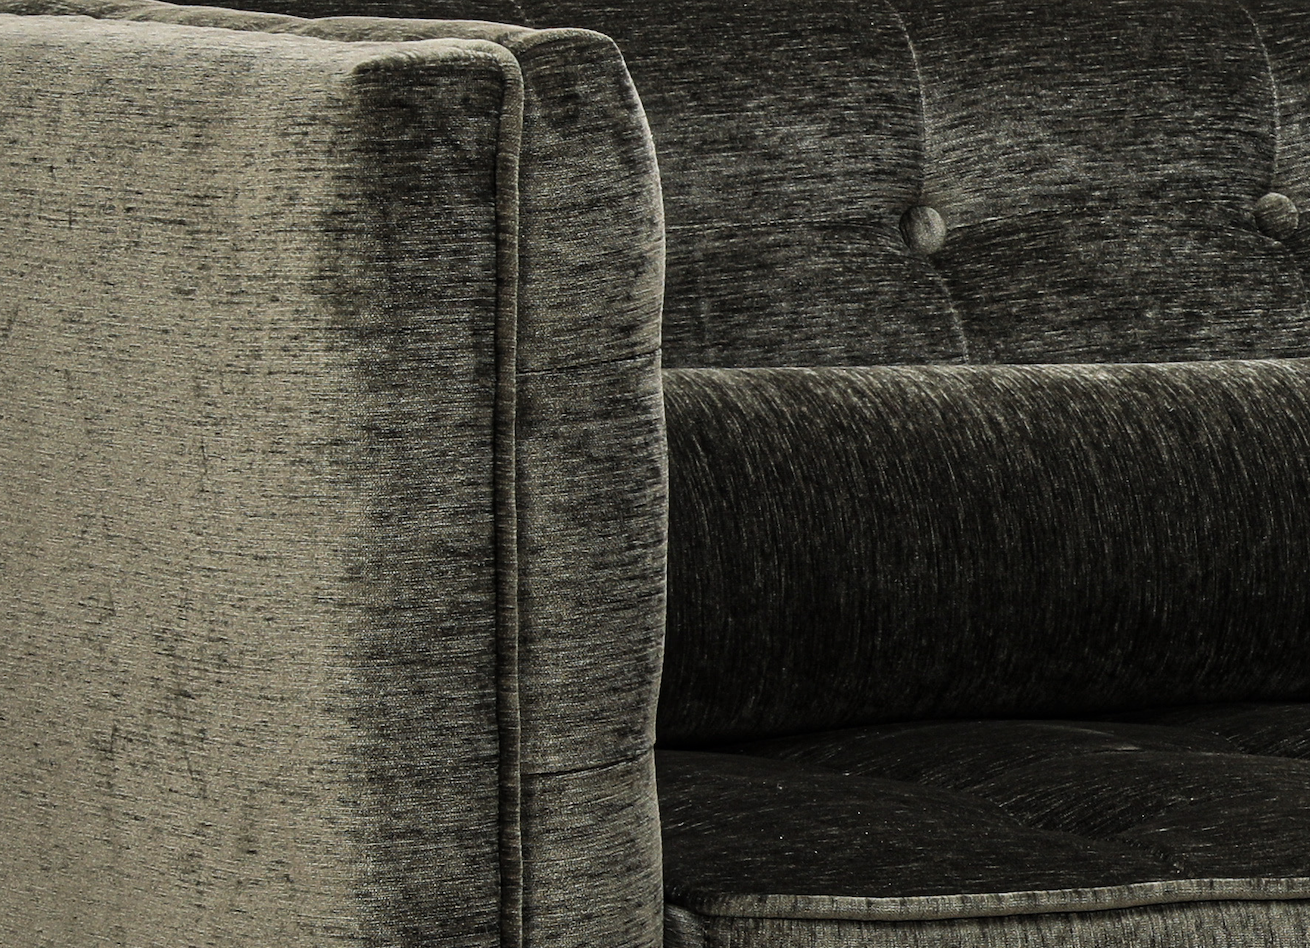 Sheraton 3 Seater Olive Green - Future Classics Furniture